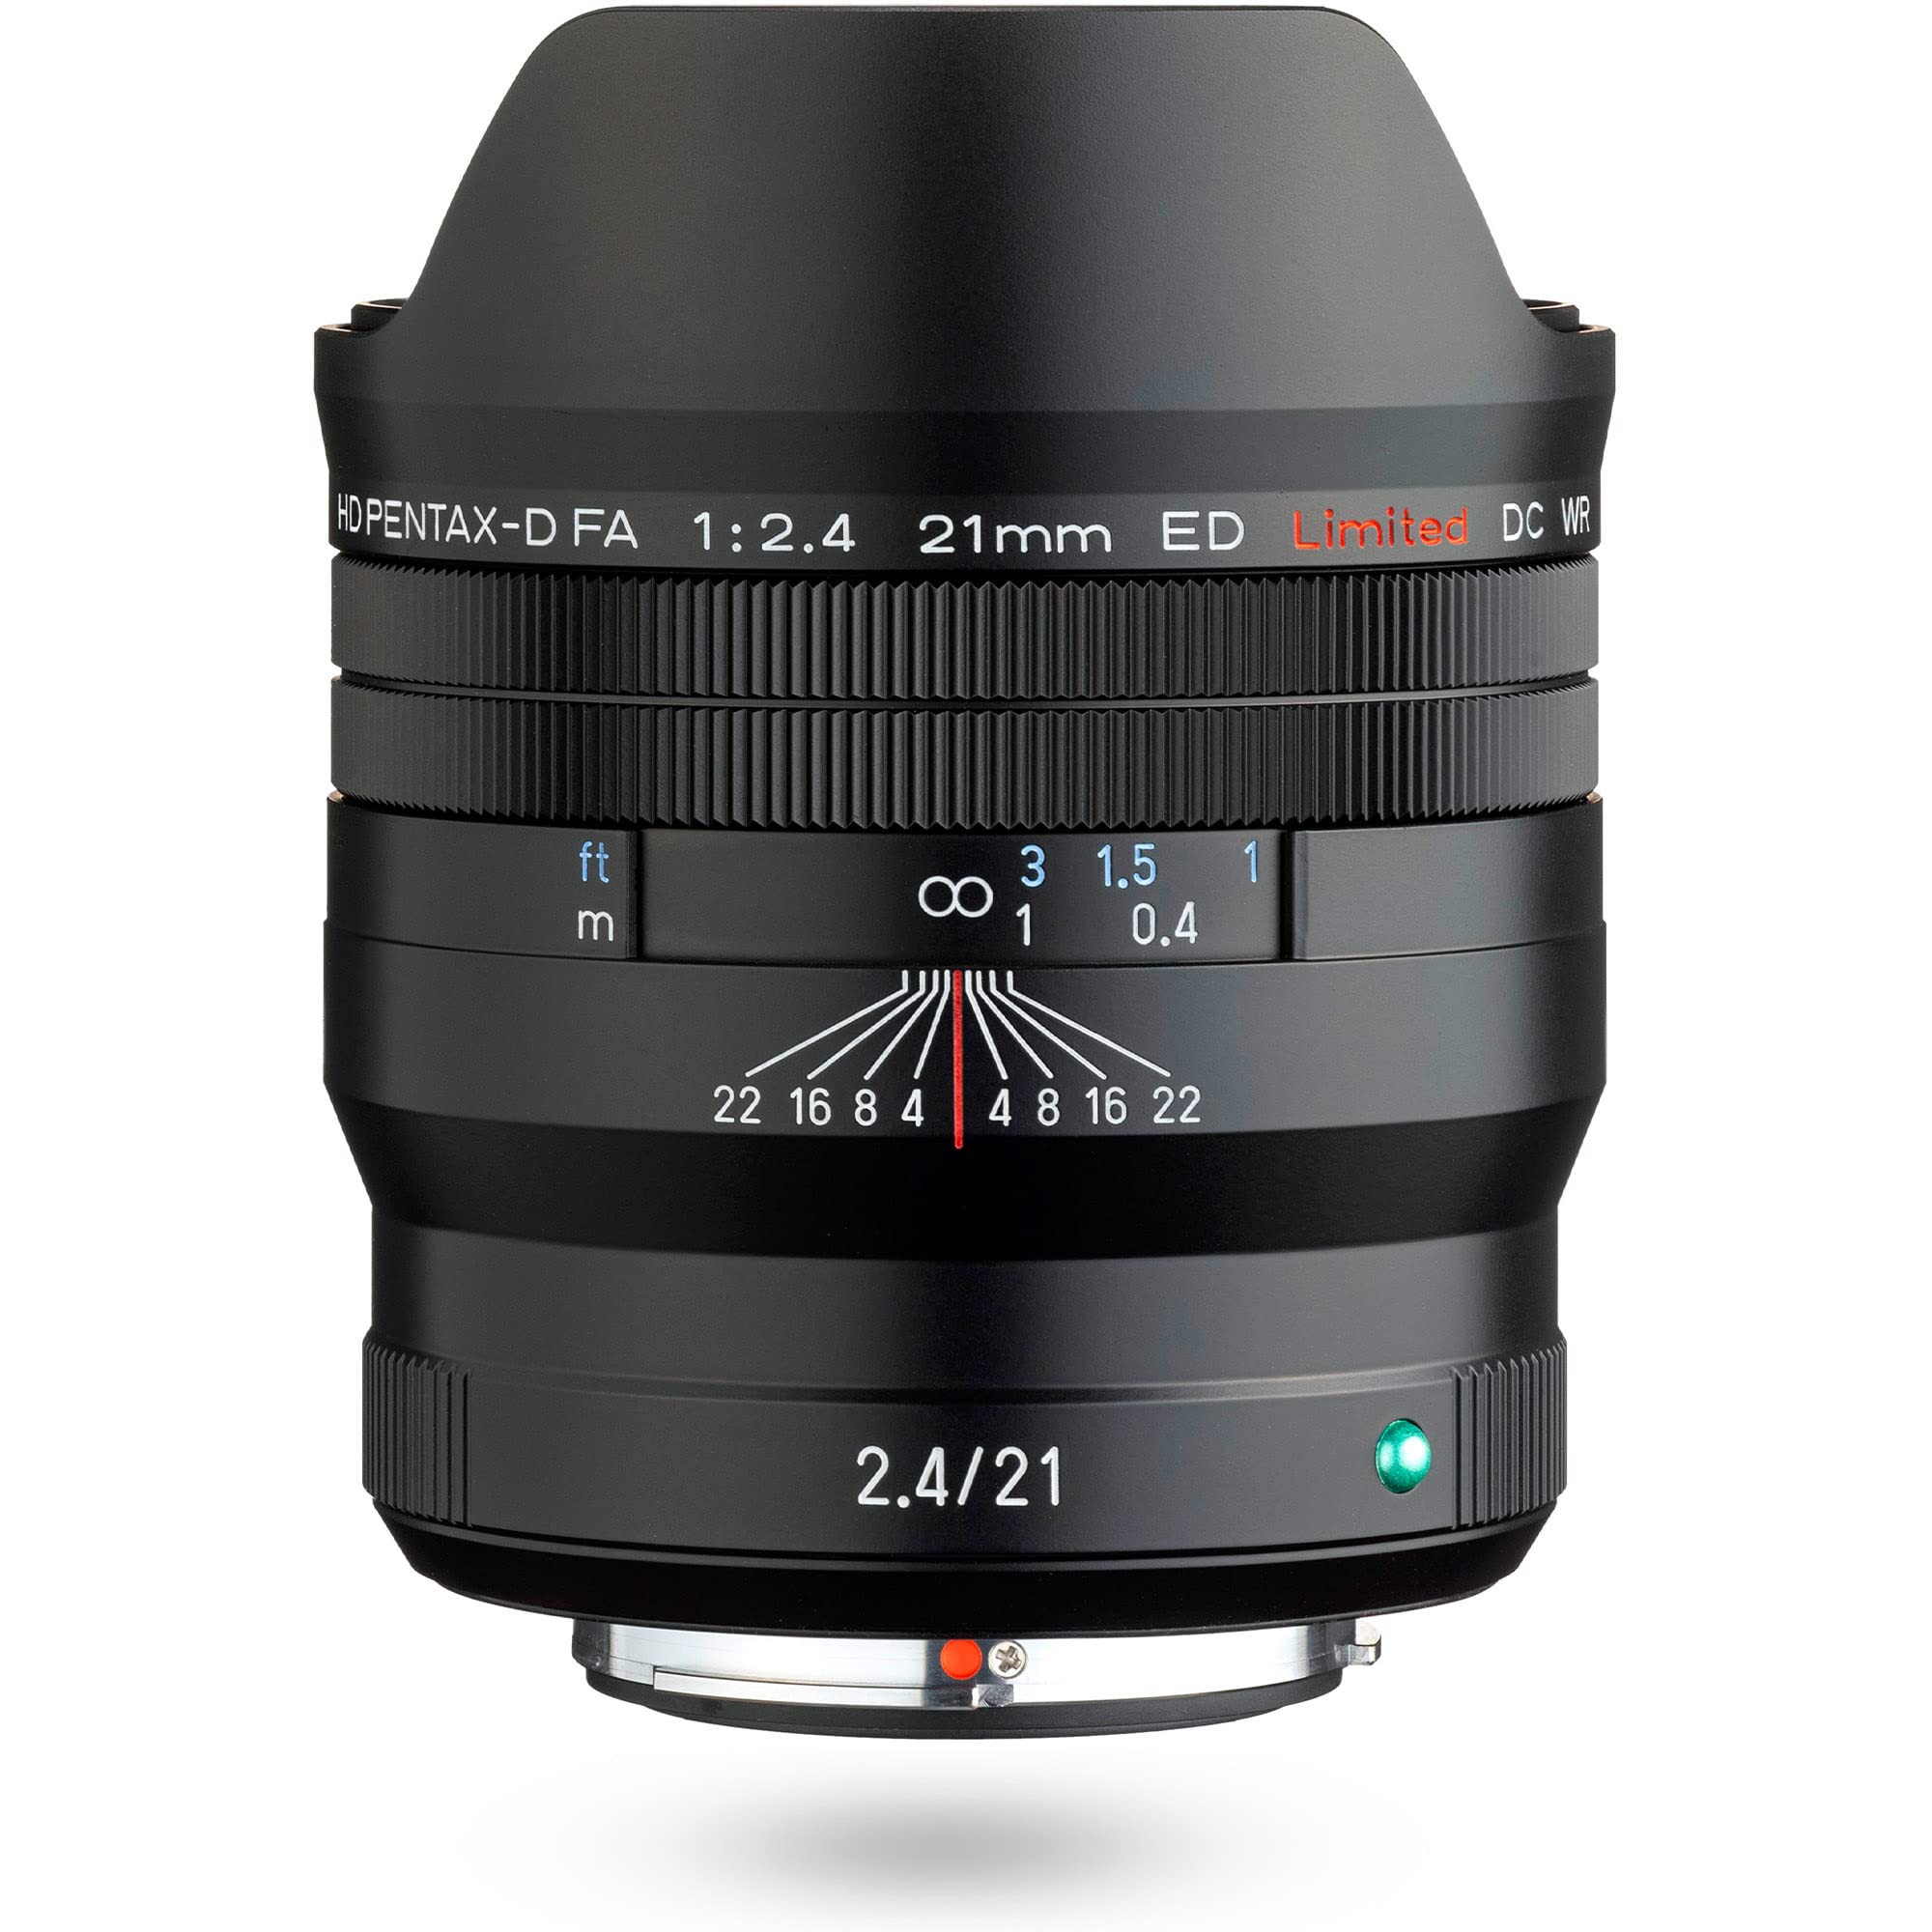 HD PENTAX-D FA 21mm F2.4ED Limited DC WR Black Ultra Wide Angle Single Focus Lens 28040